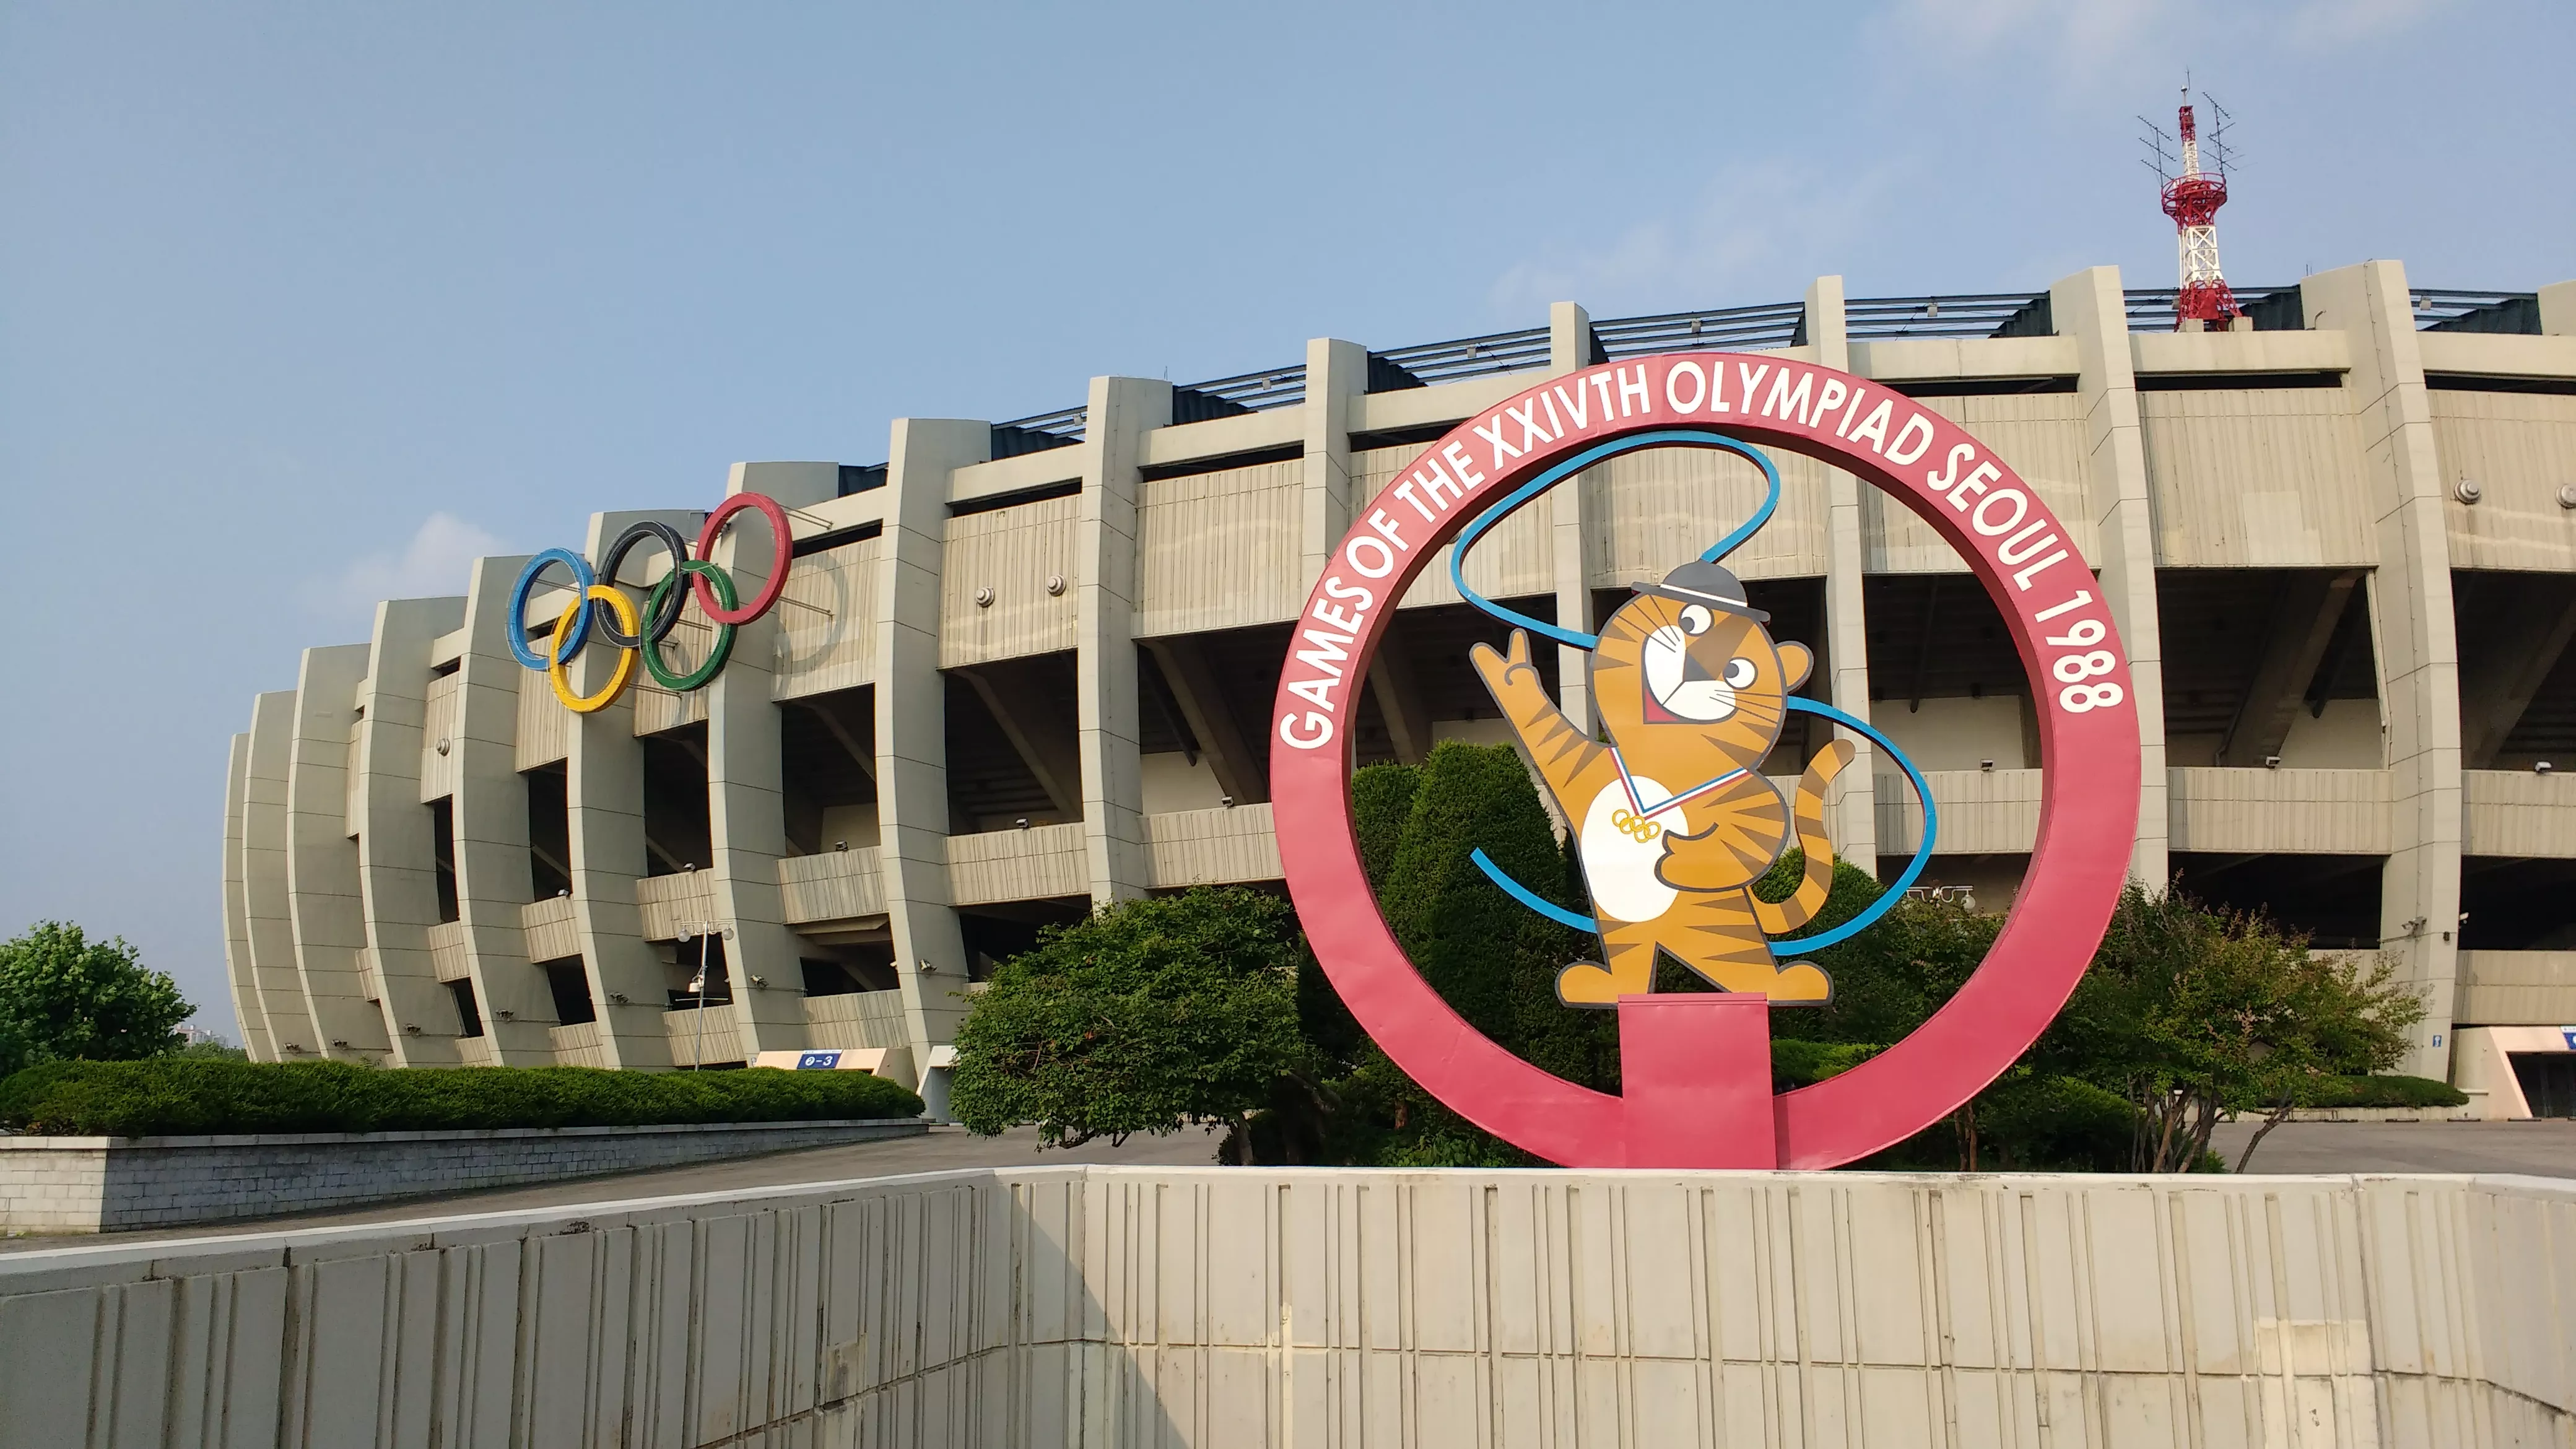 Seoul Olympic Stadium in South Korea, East Asia | Football - Rated 3.5